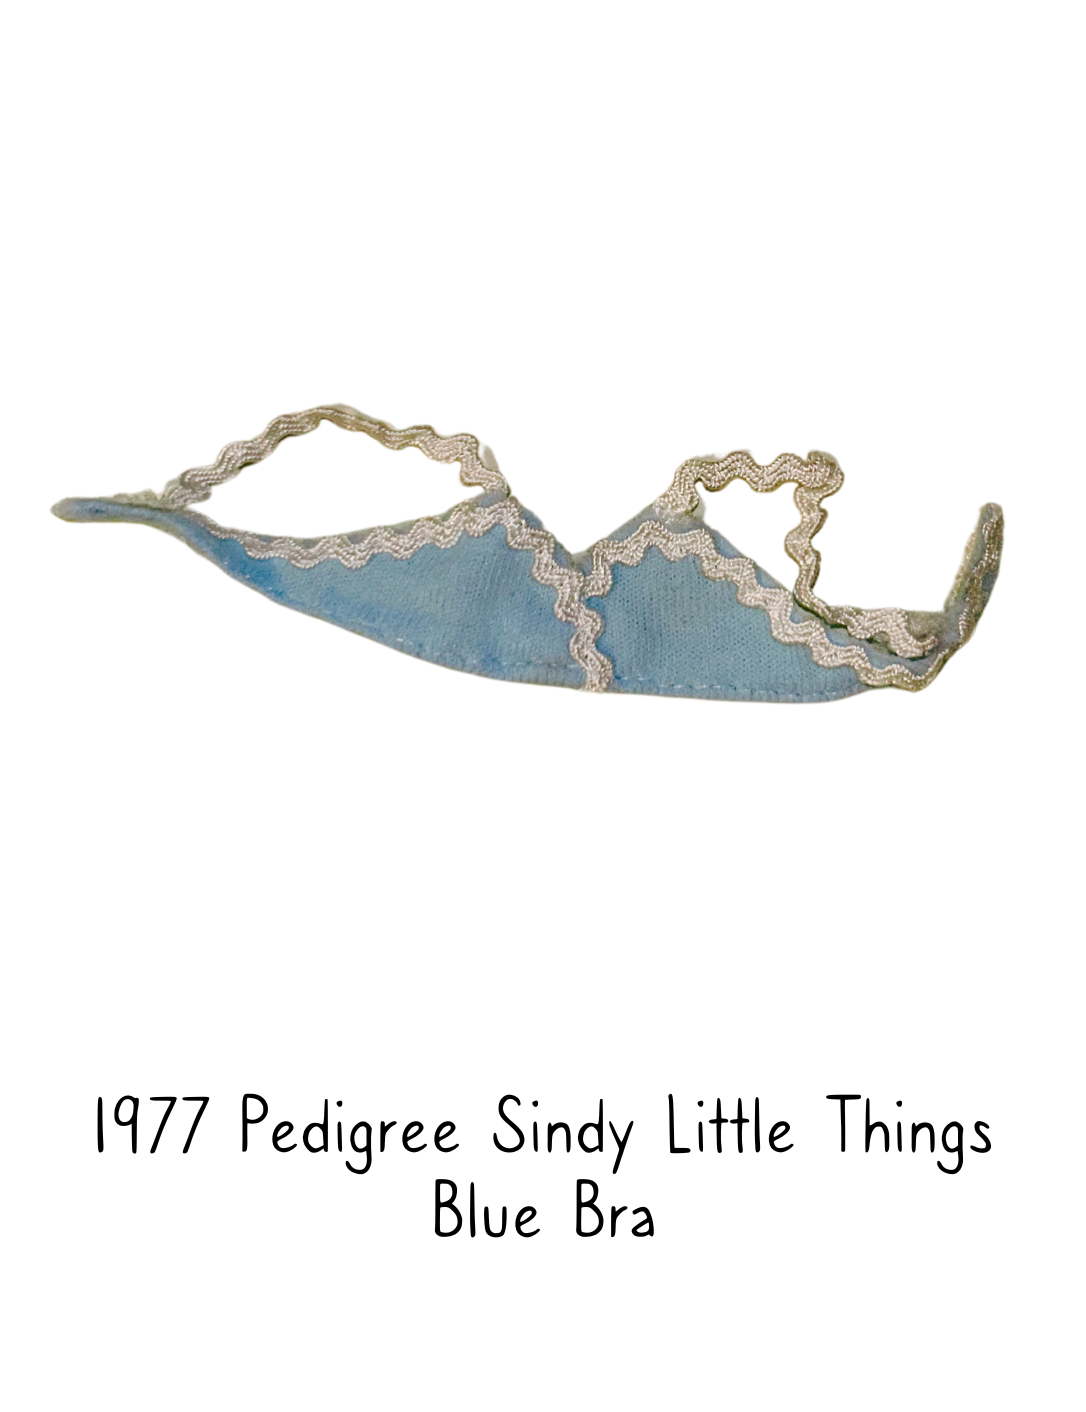 1977 Pedigree Sindy Fashion Doll Little Things Lingerie Blue Bra